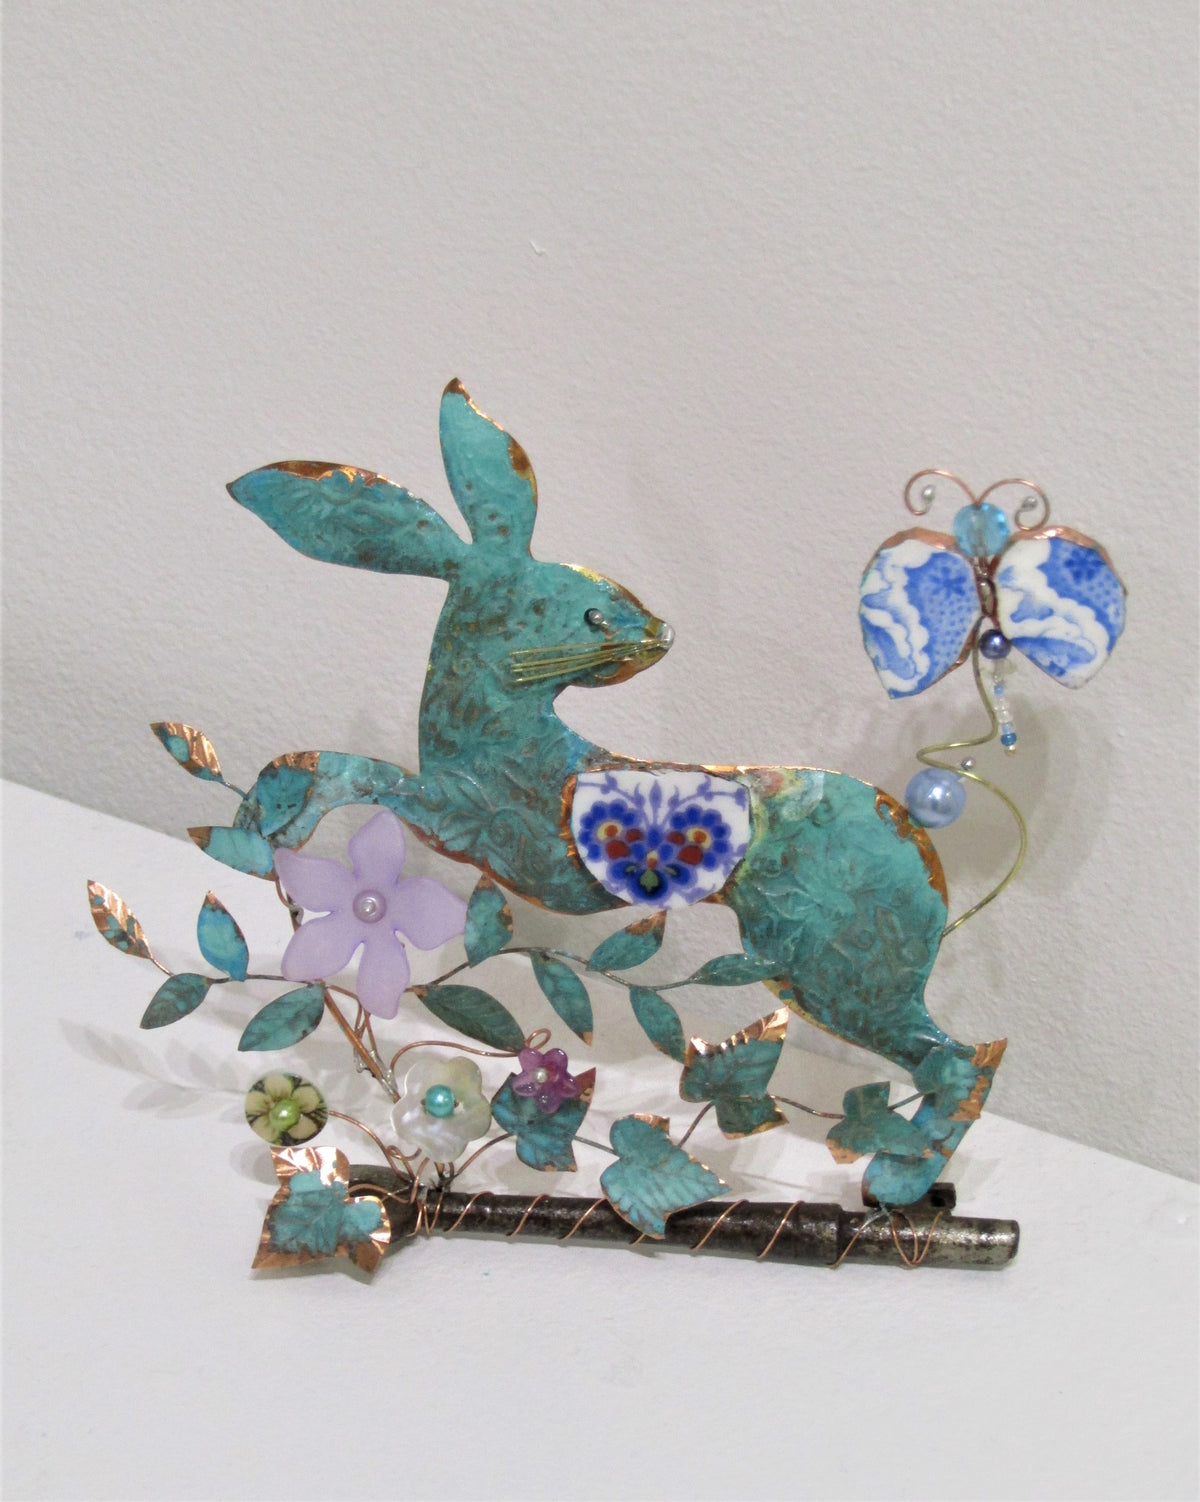 Hare Assemblage by Linda Lovatt